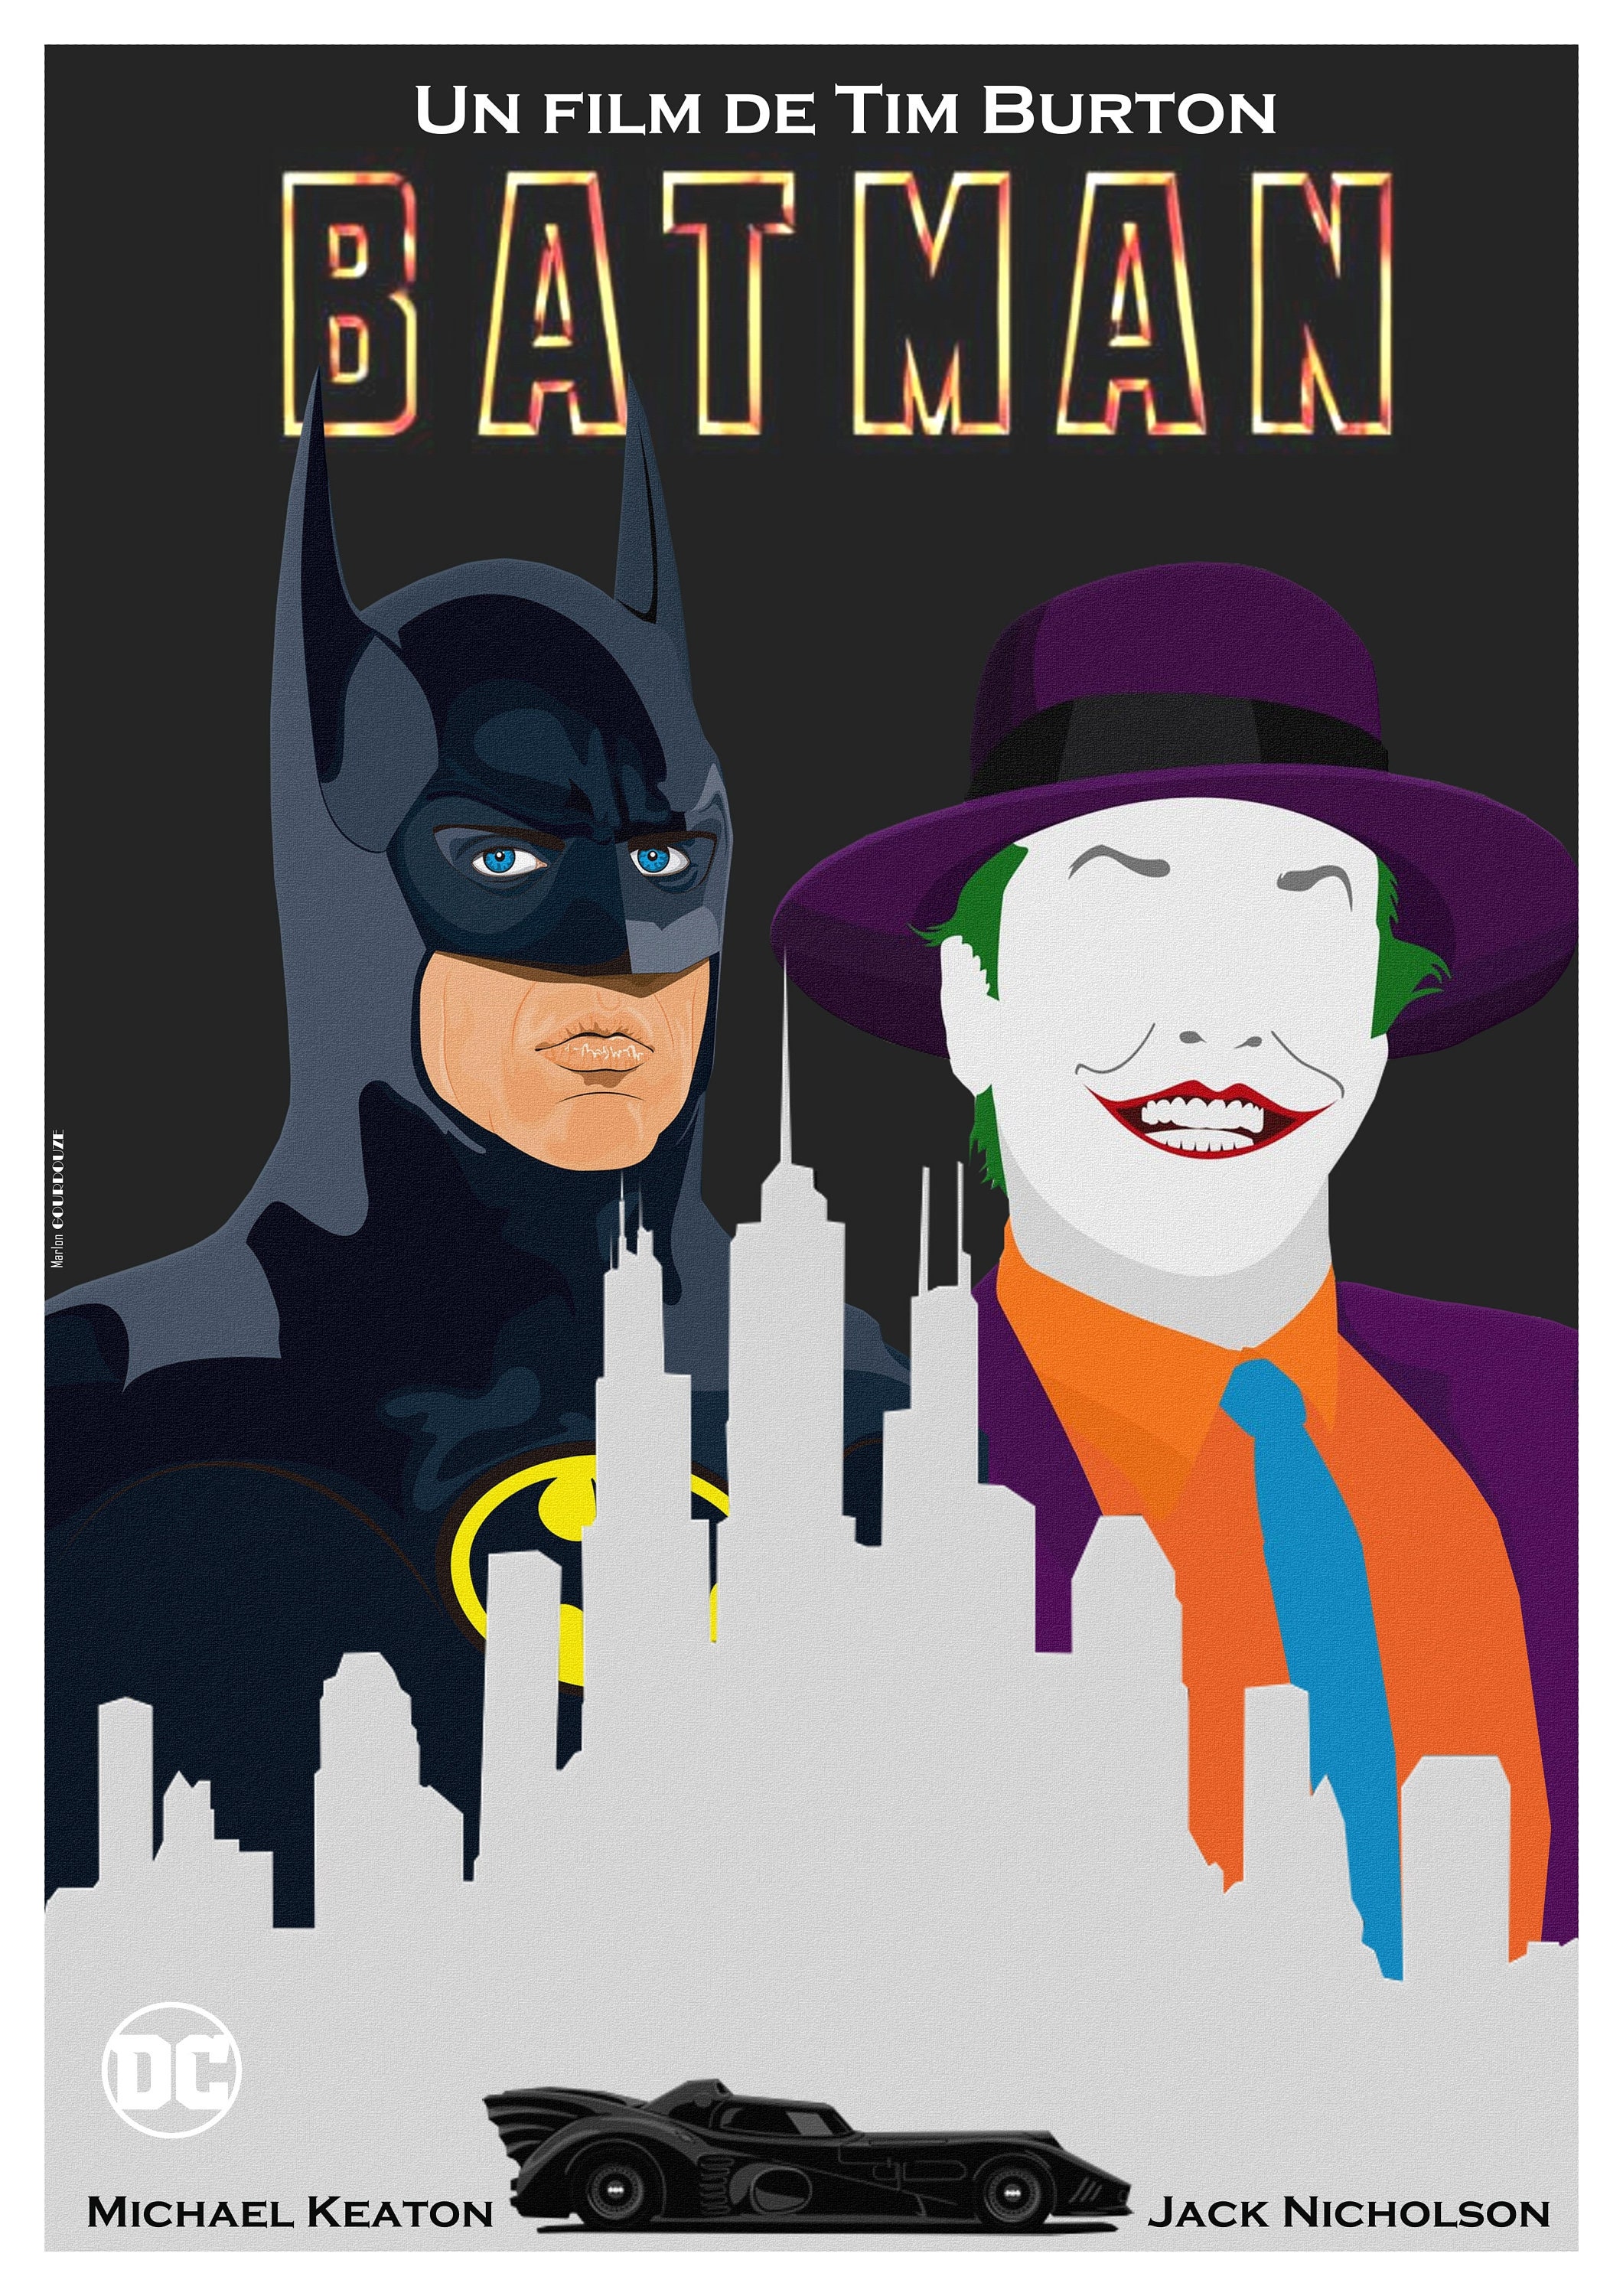 Poster of Tim Burton's Batman Movie - Etsy